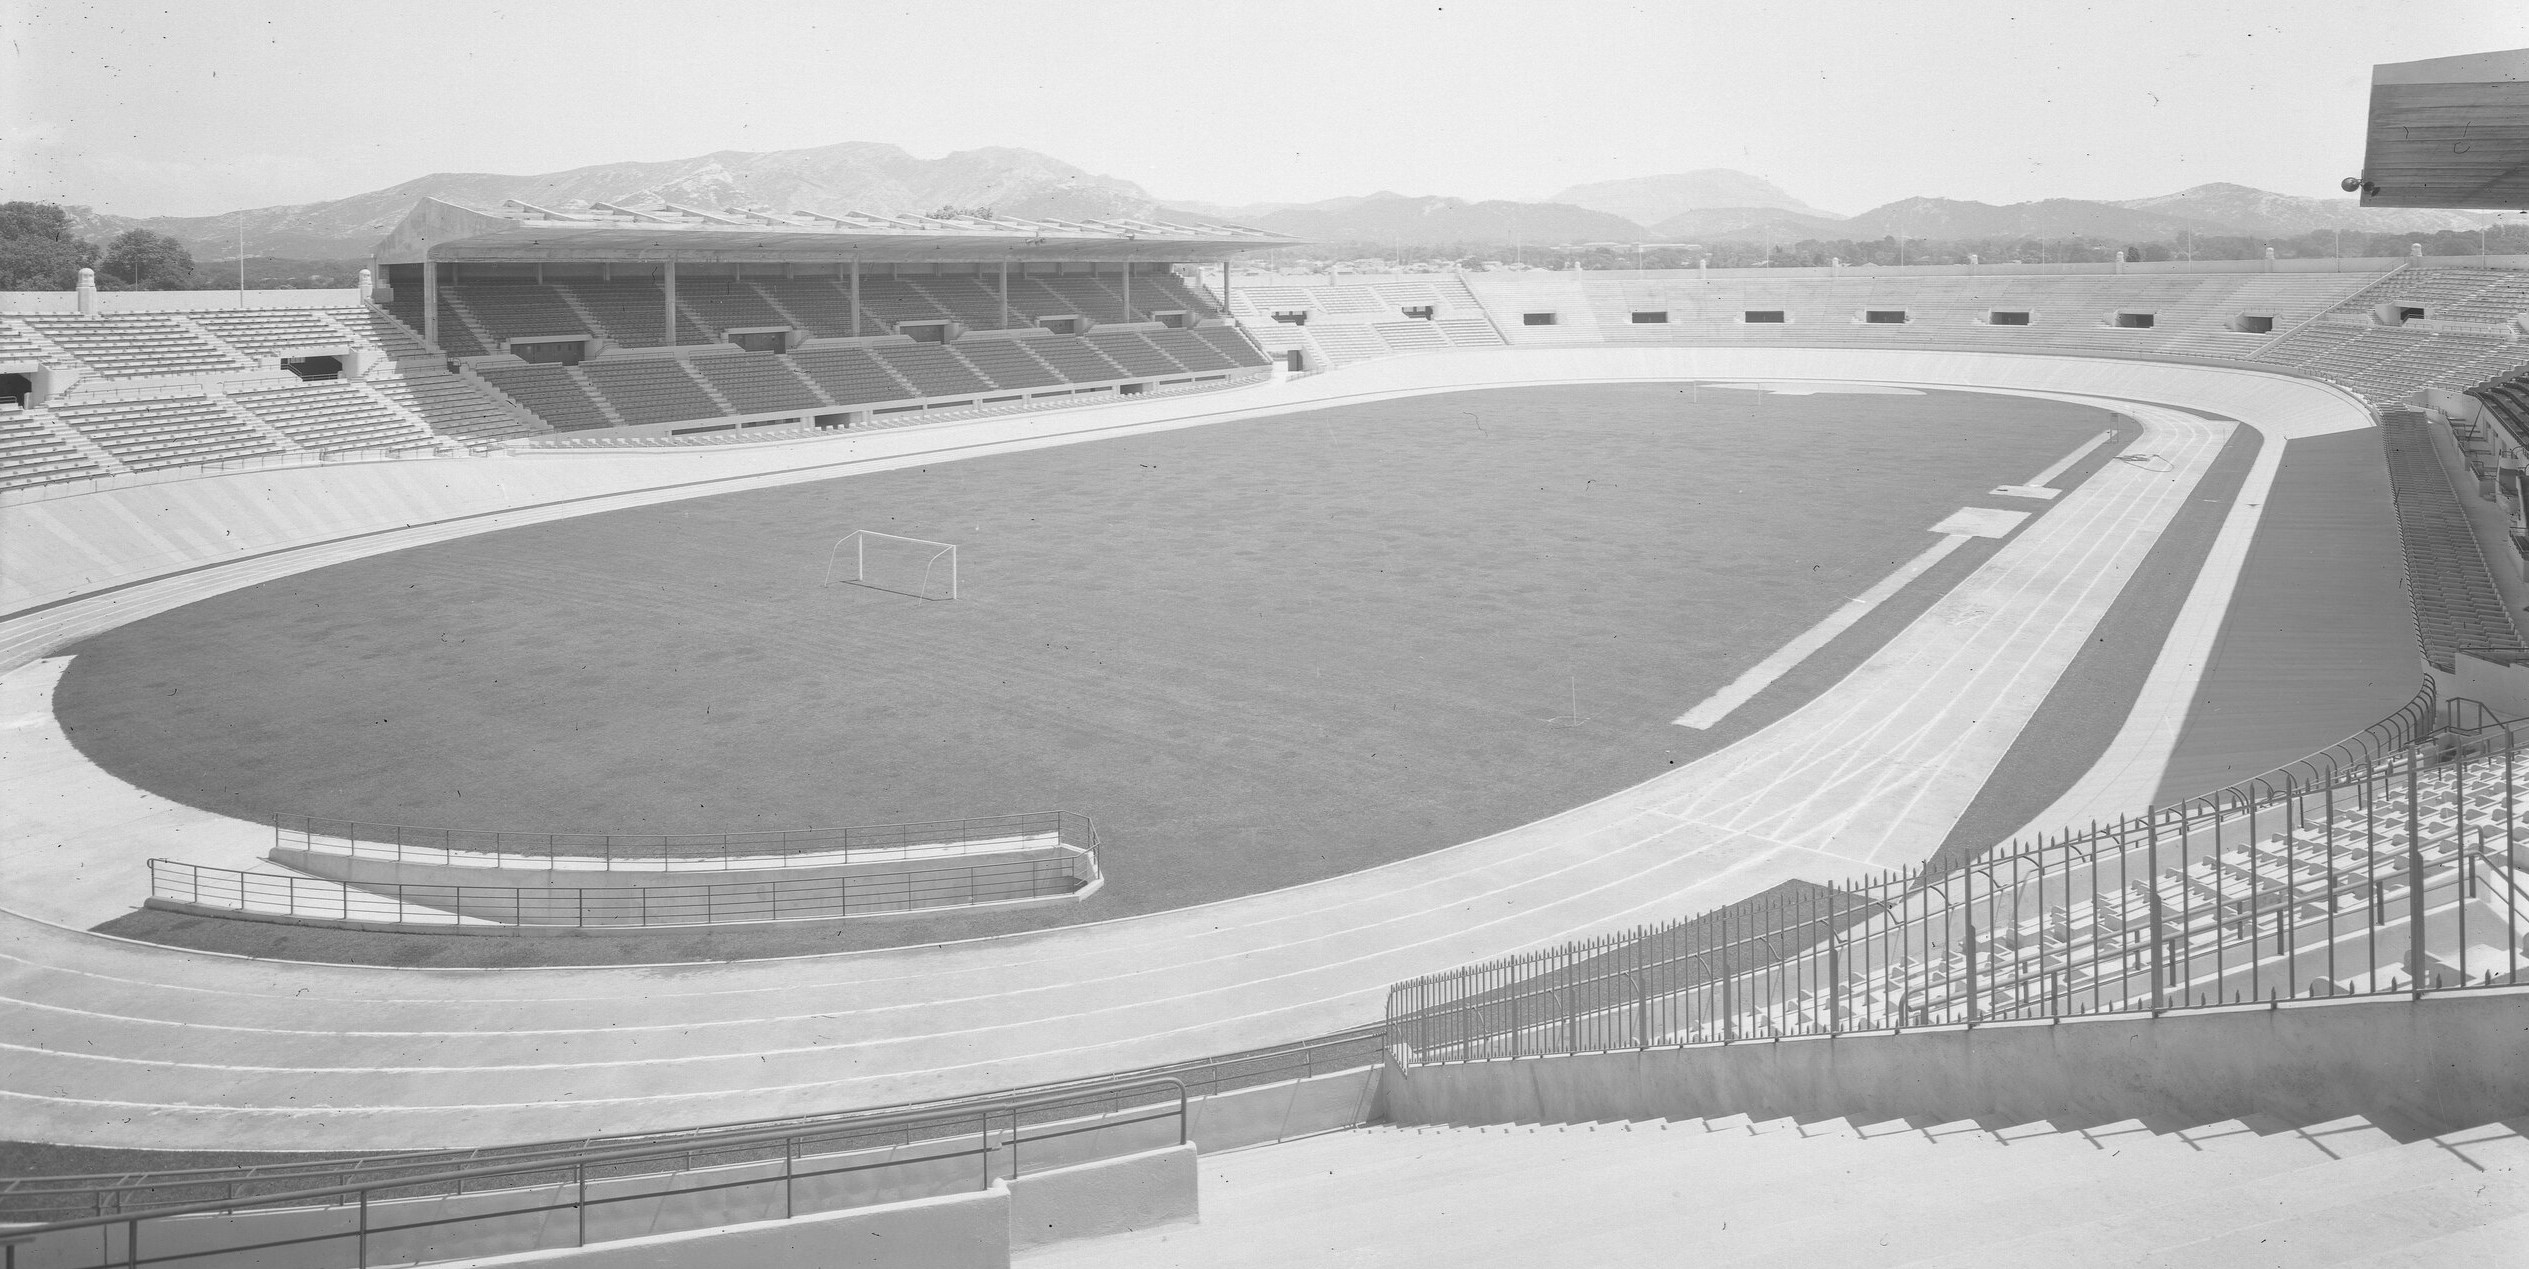 Stade Vélodrome in 1937, Marseille, France